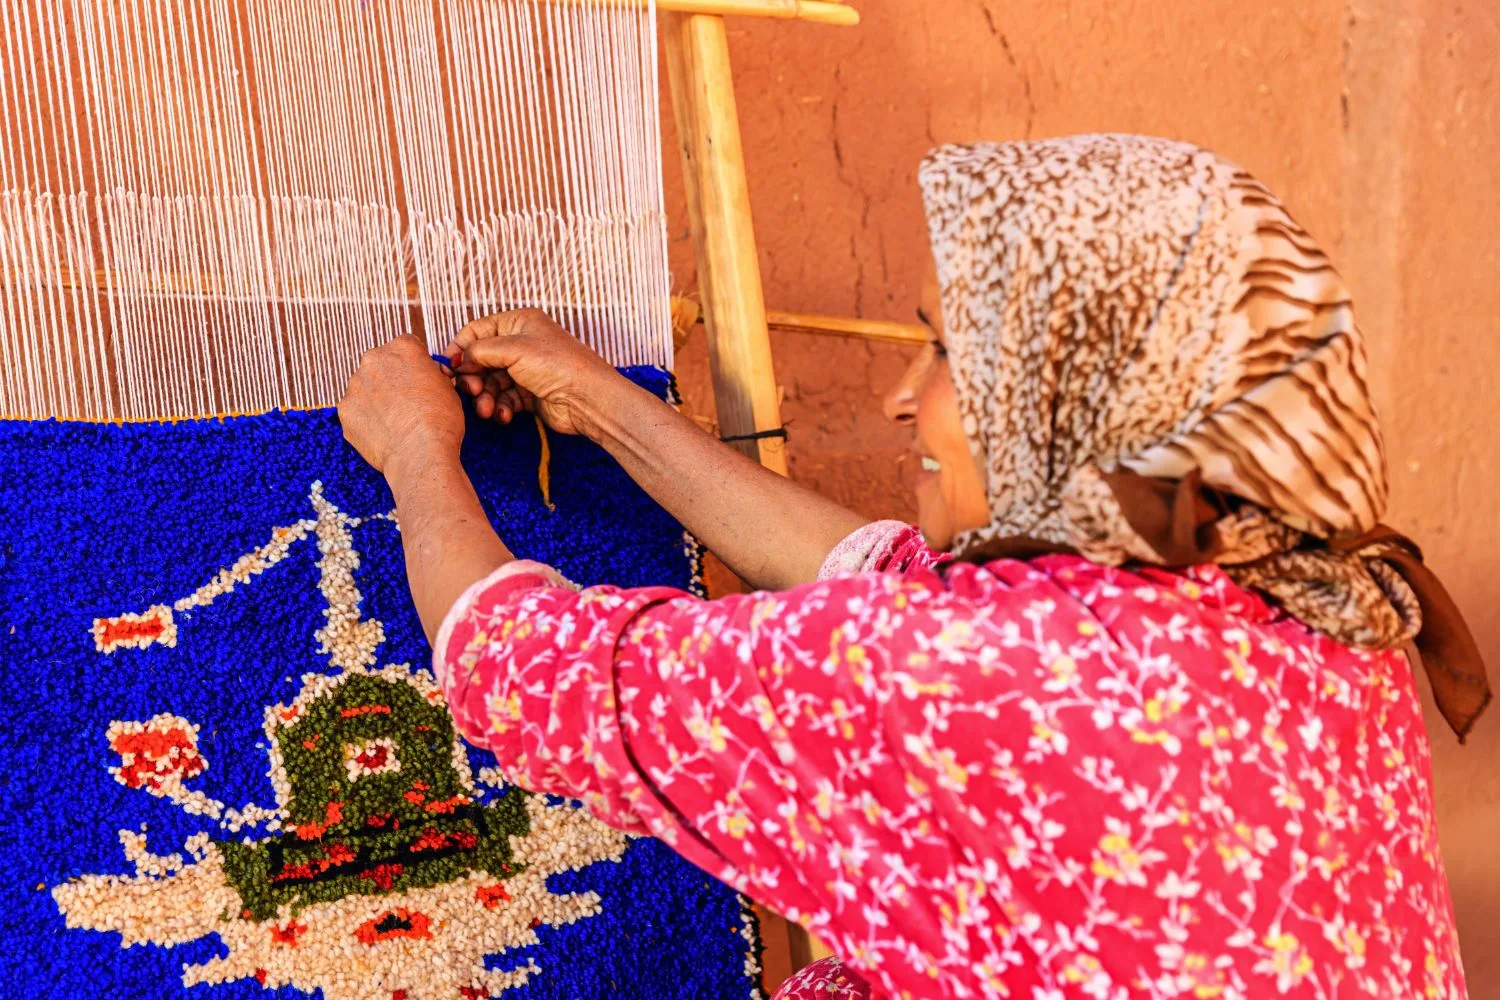 Berber woman weaving textiles in Morocco